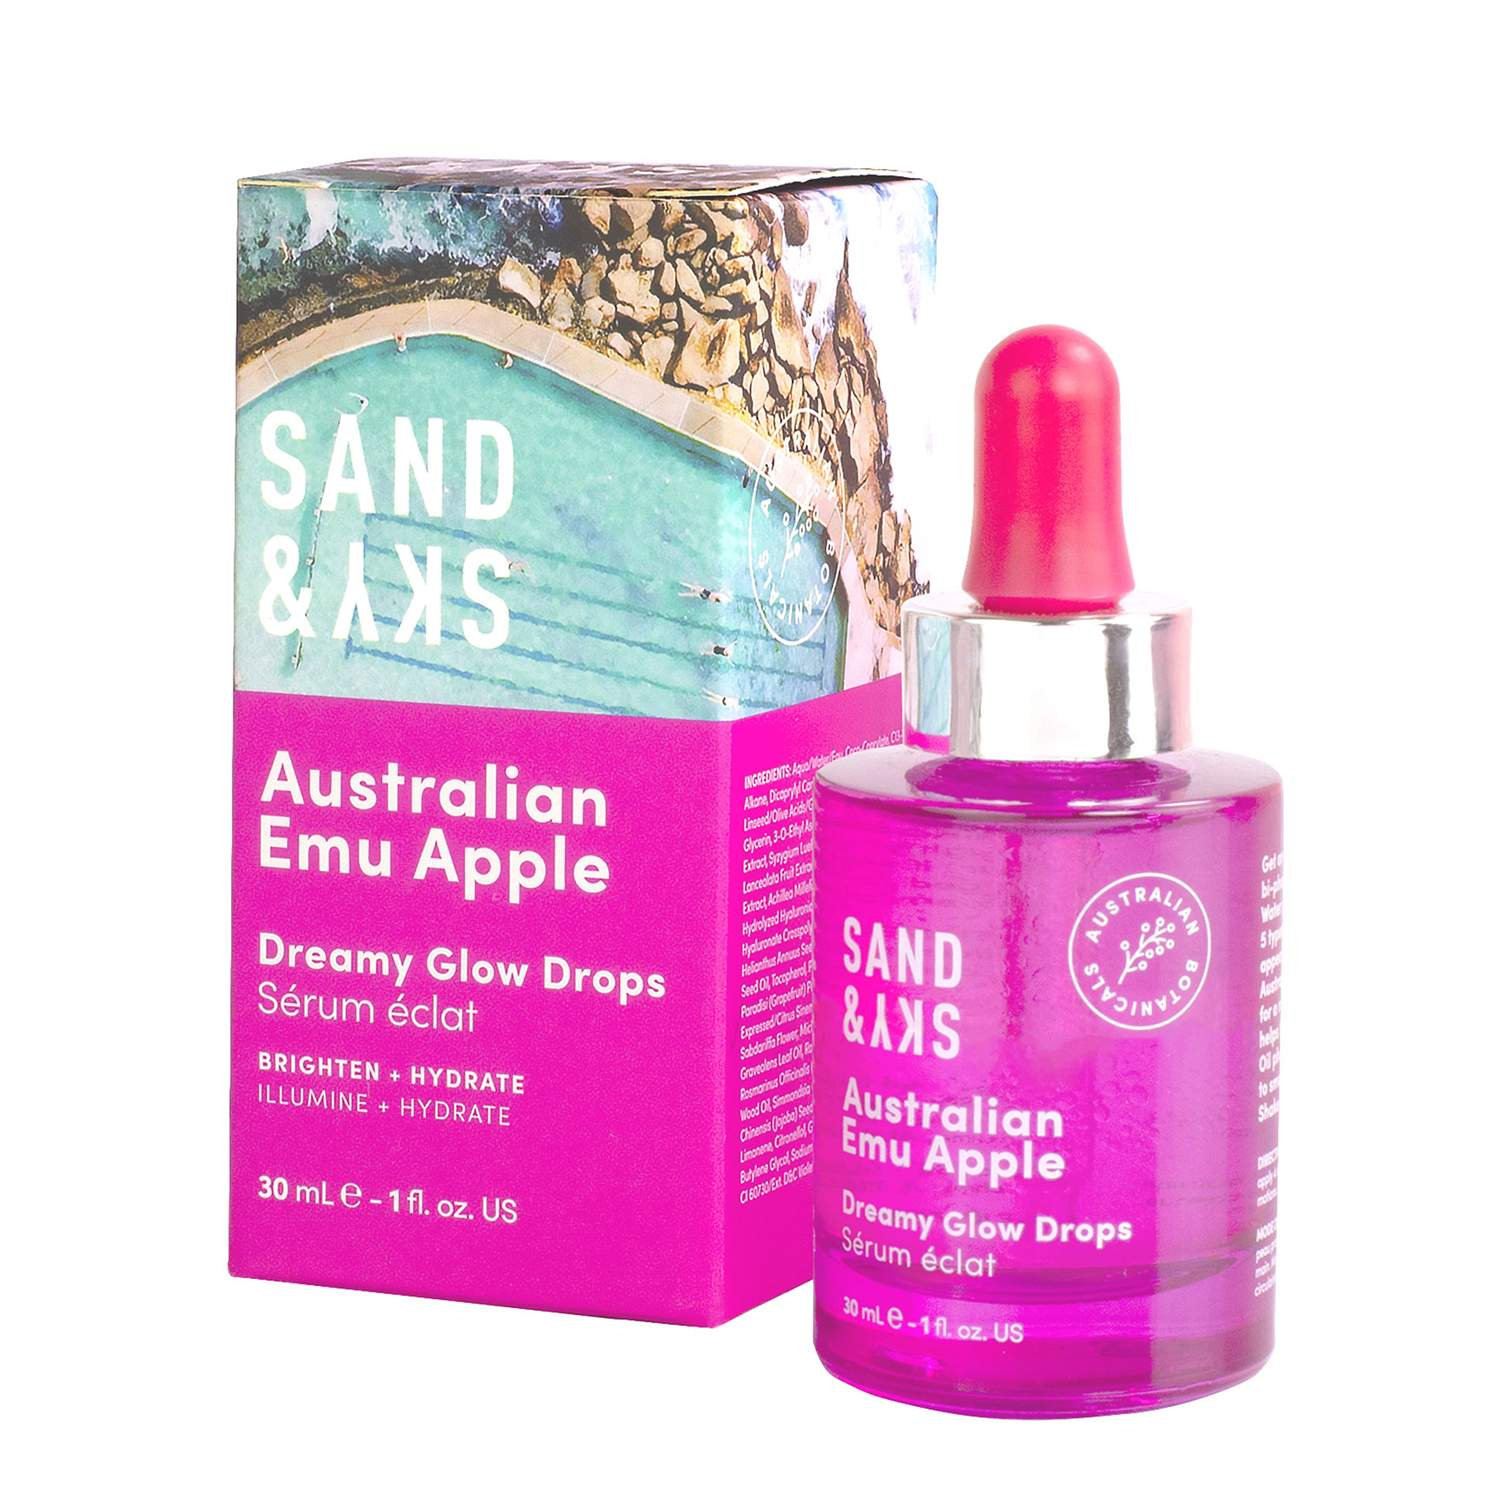 Sand & Sky Australian Emu Apple Dreamy Glow Drops